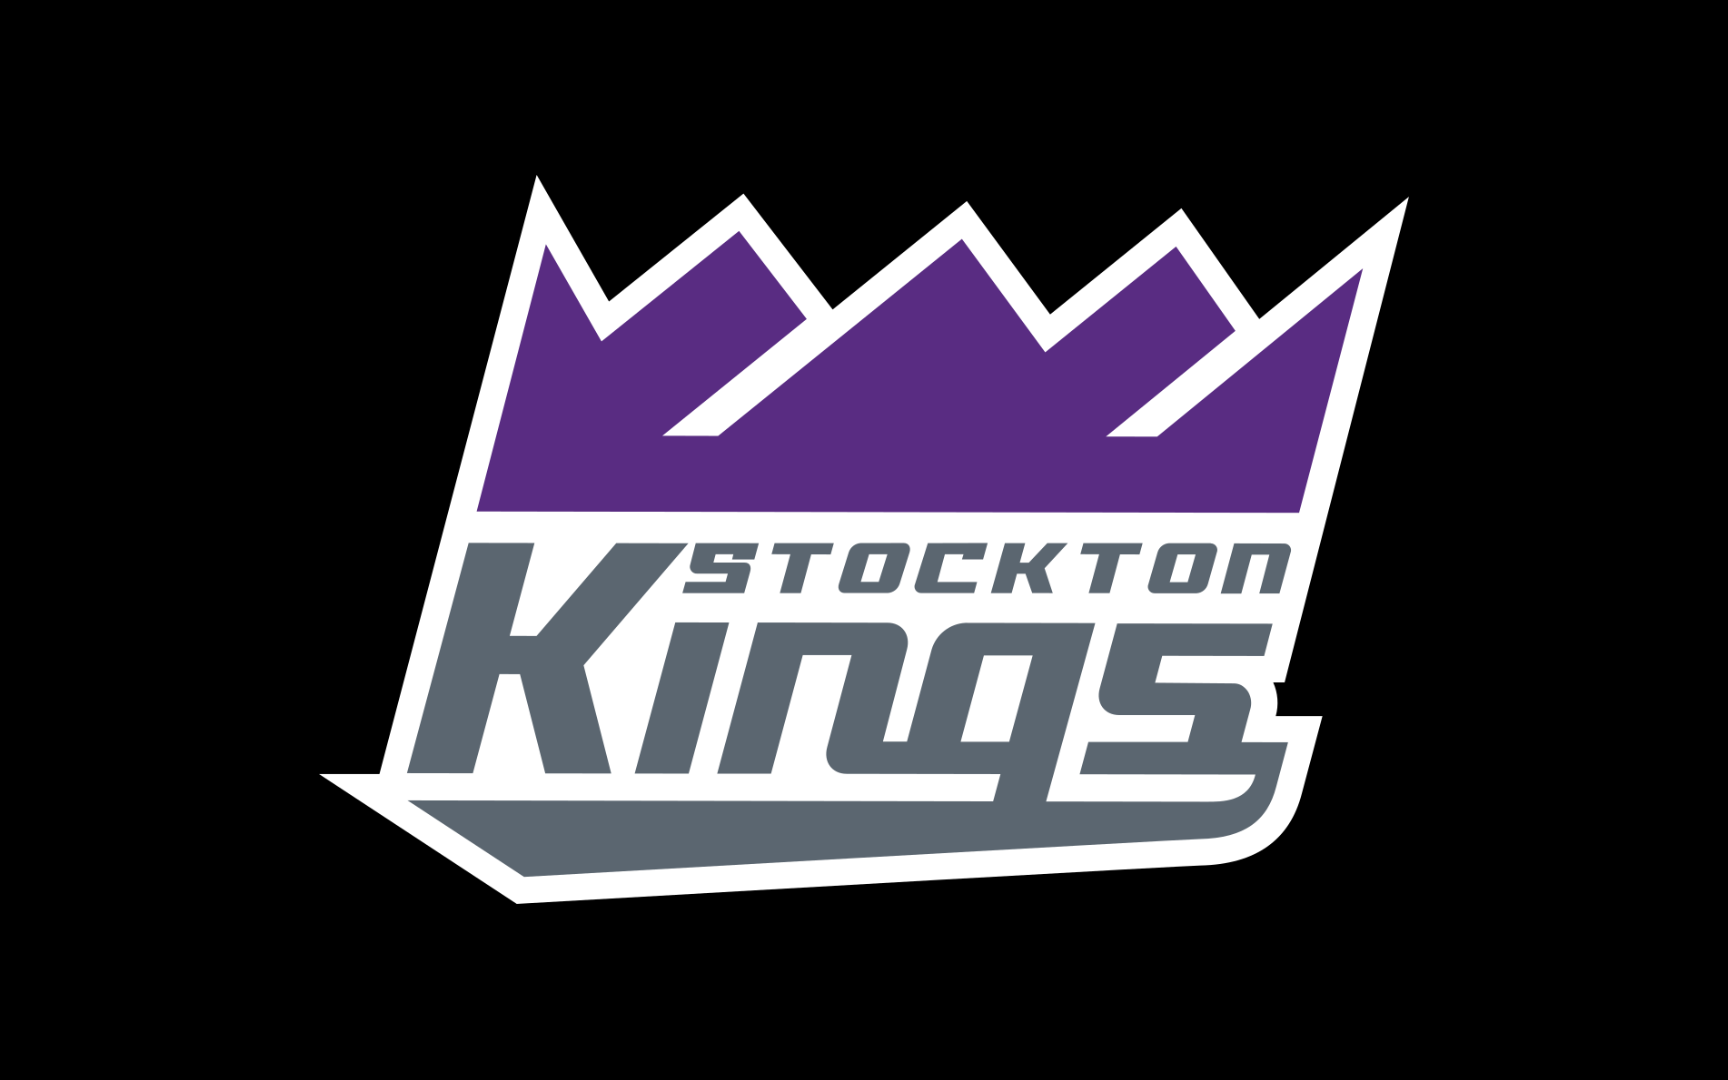 Stockton Kings vs South Bay Lakers